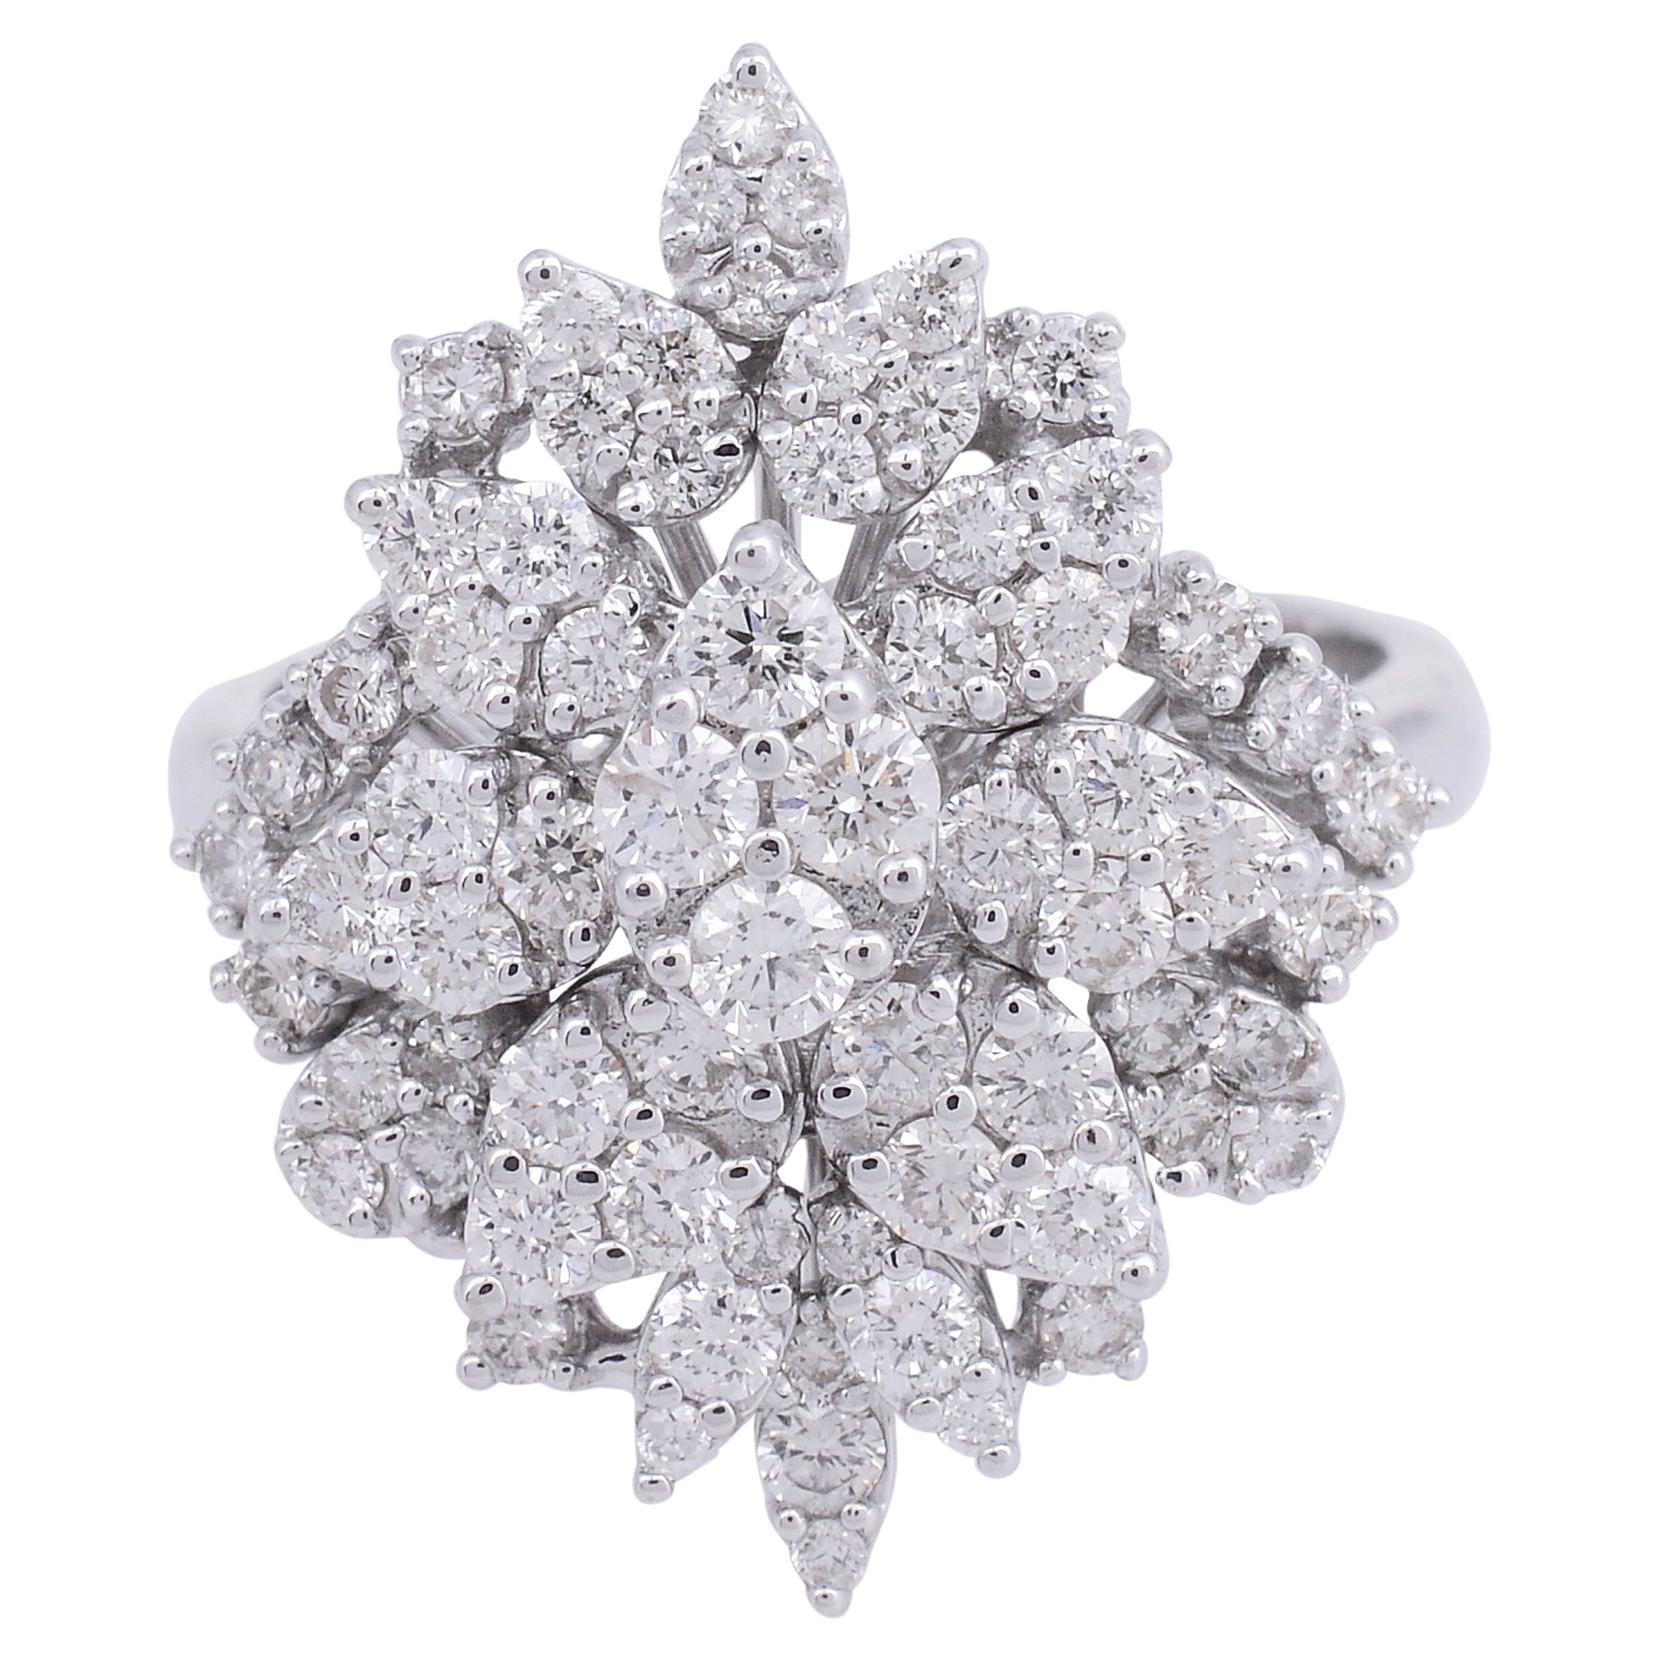 Natural 1.45 Carat Diamond Cluster Ring 14 Karat White Gold Handmade Jewelry For Sale